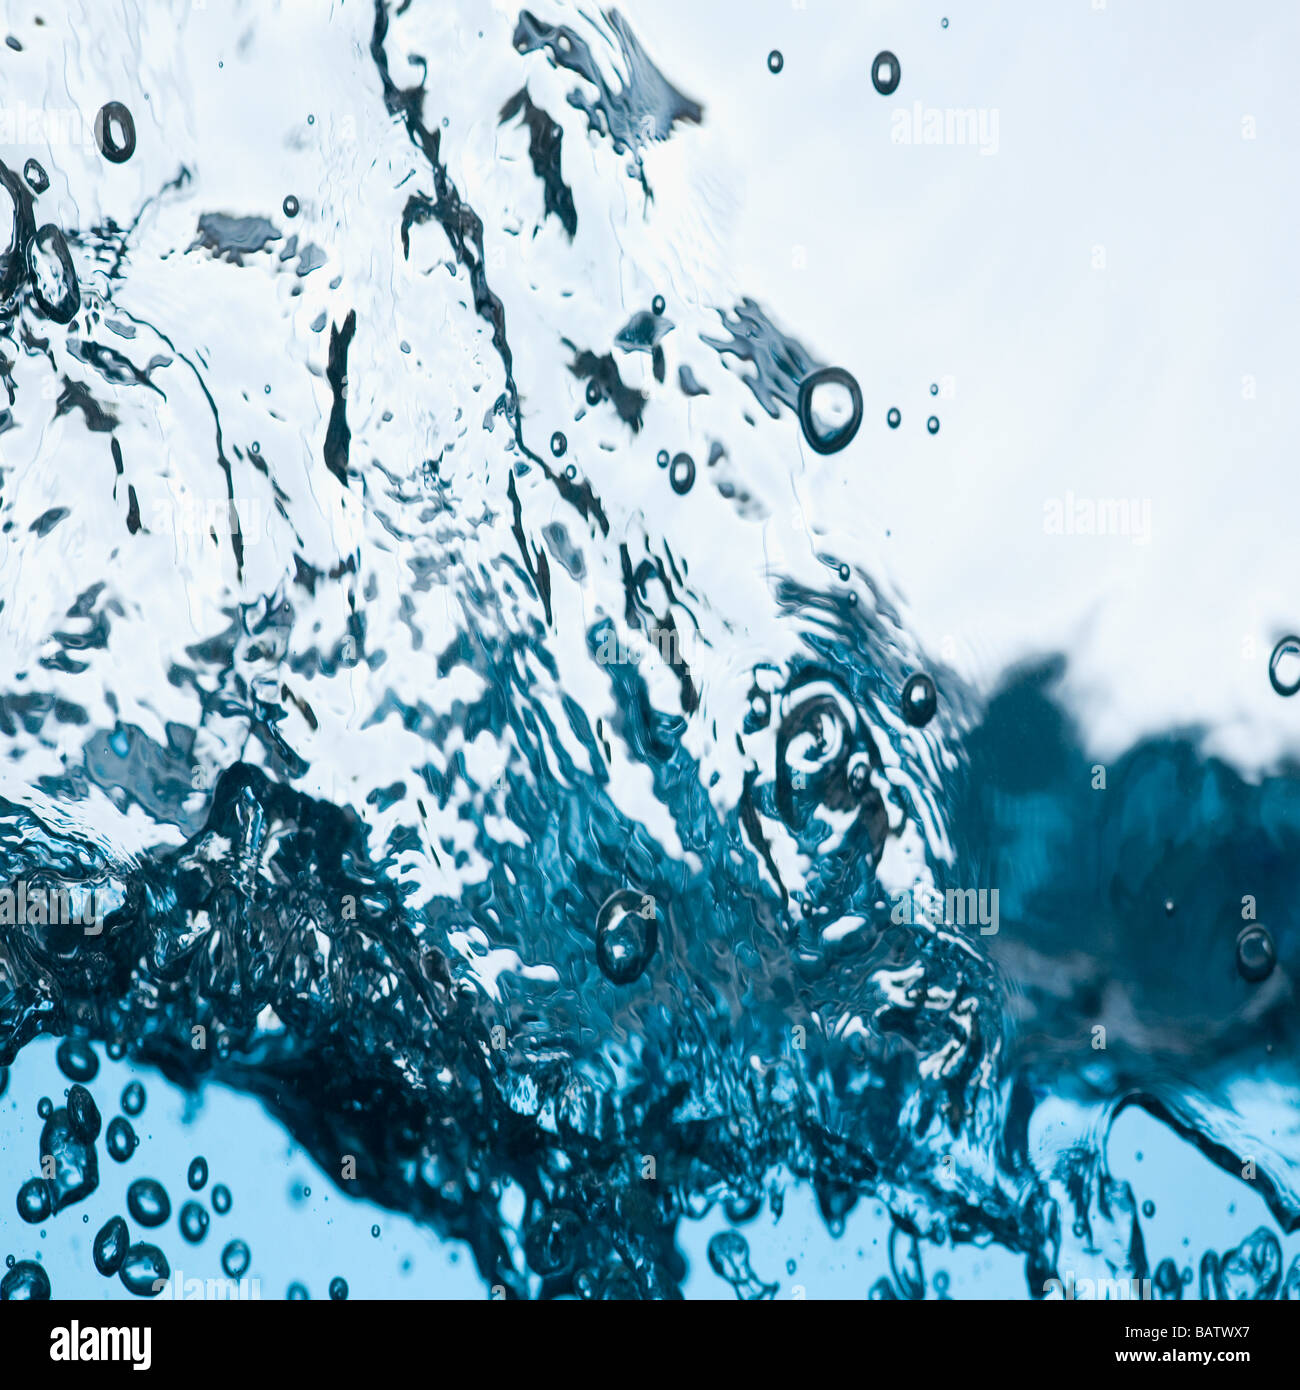 Splashing water Stock Photo